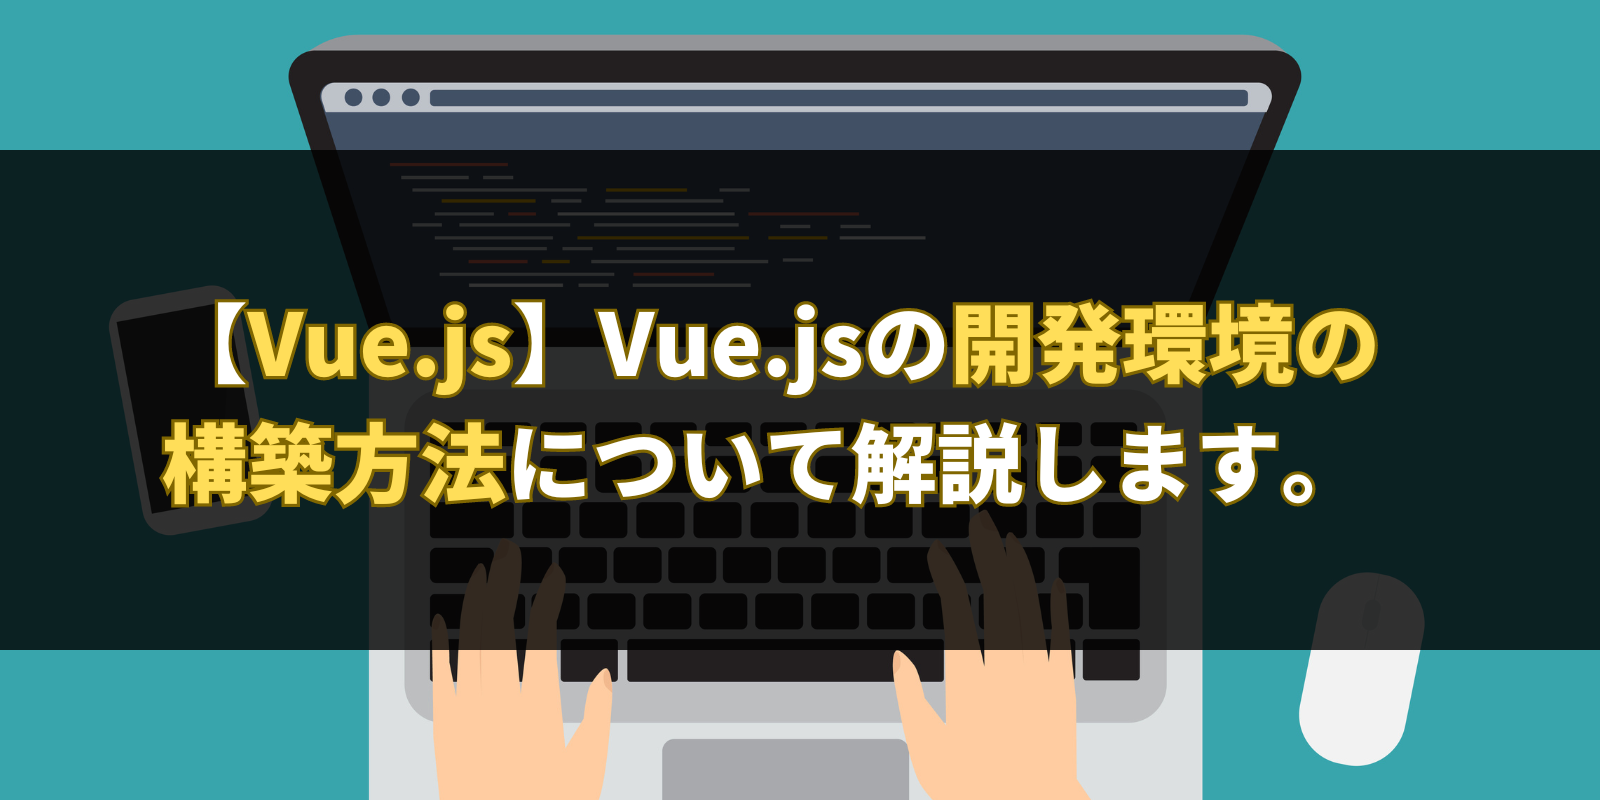 【Vue.js】Vue.jsの開発環境の構築方法について解説します。